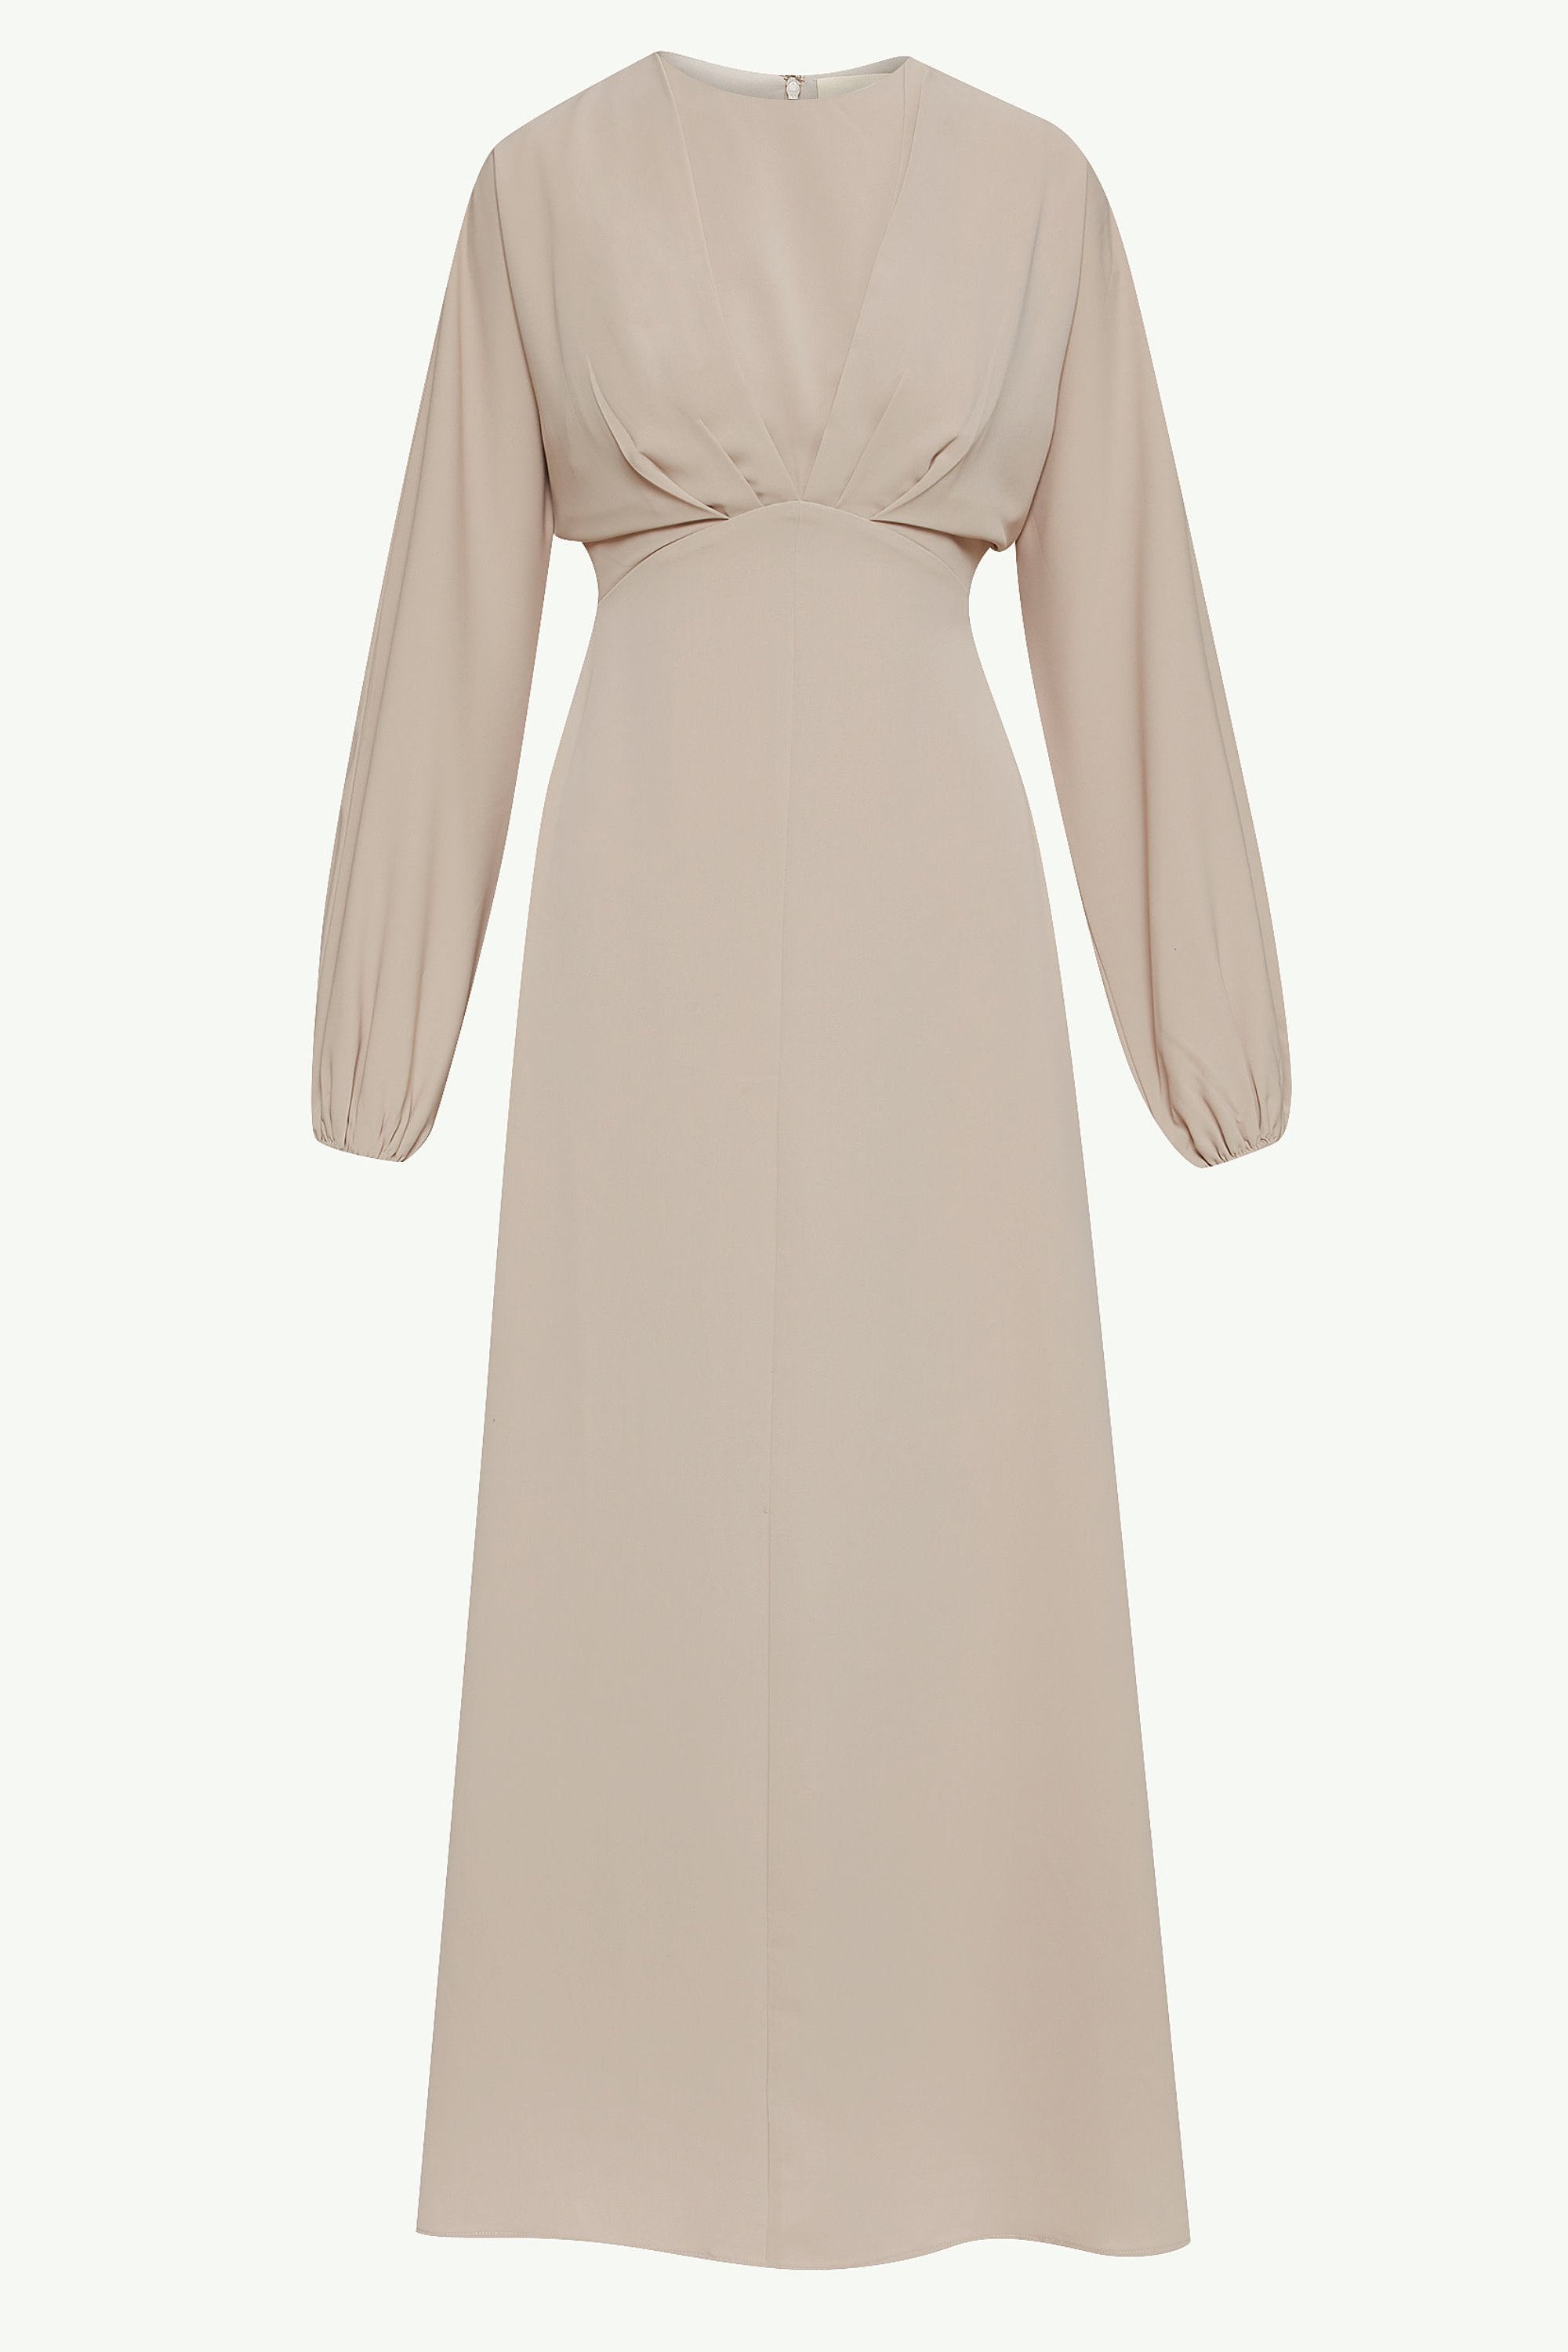 Karina Dolman Sleeve Maxi Dress - Stone Clothing Veiled 